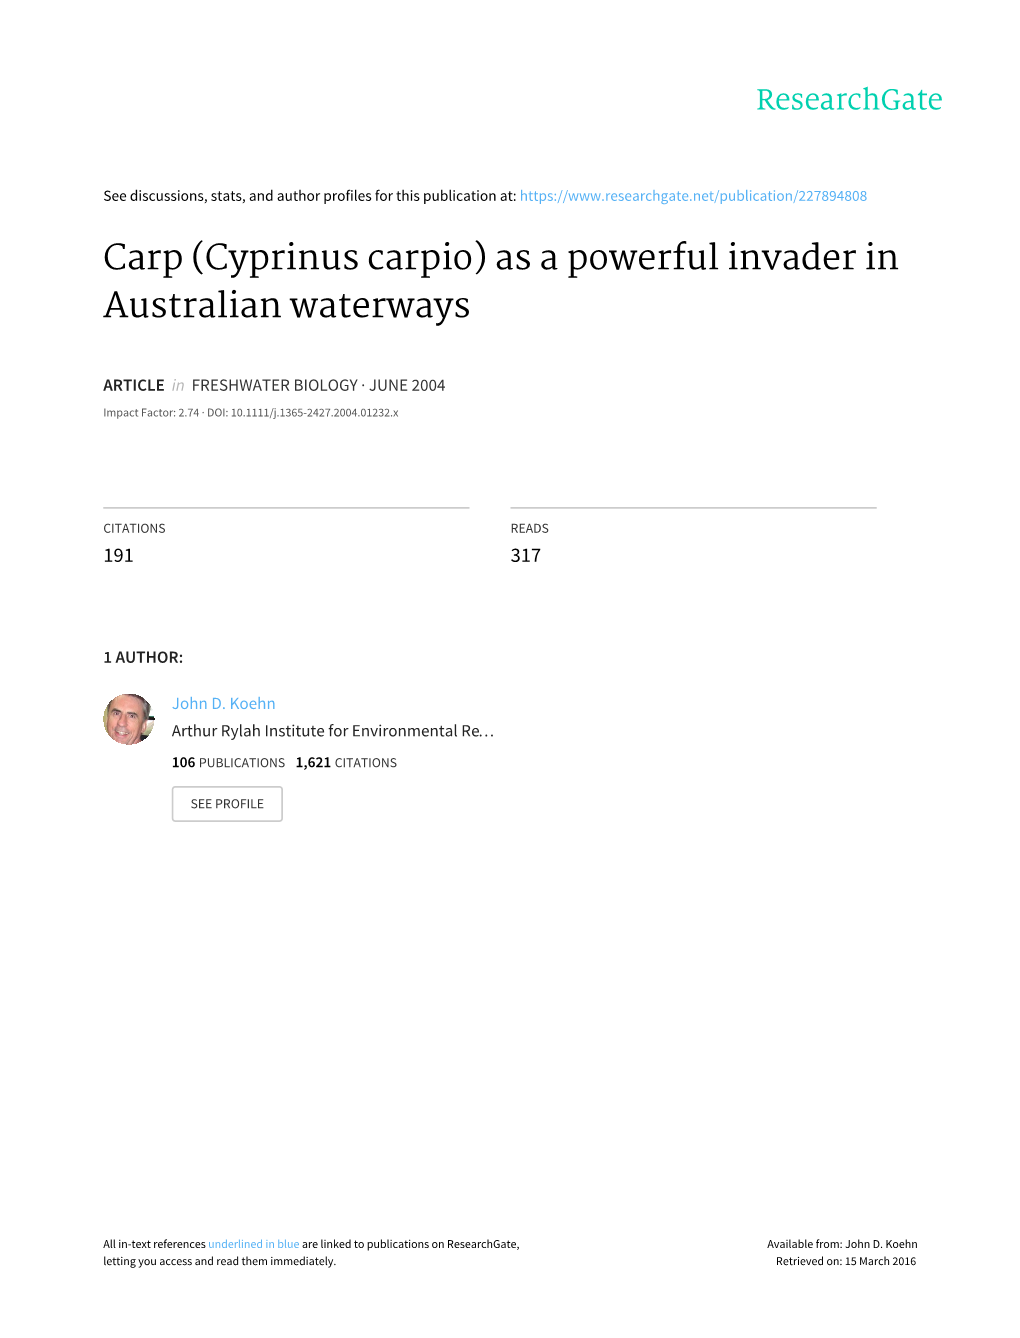 Carp (Cyprinus Carpio) As a Powerful Invader in Australian Waterways